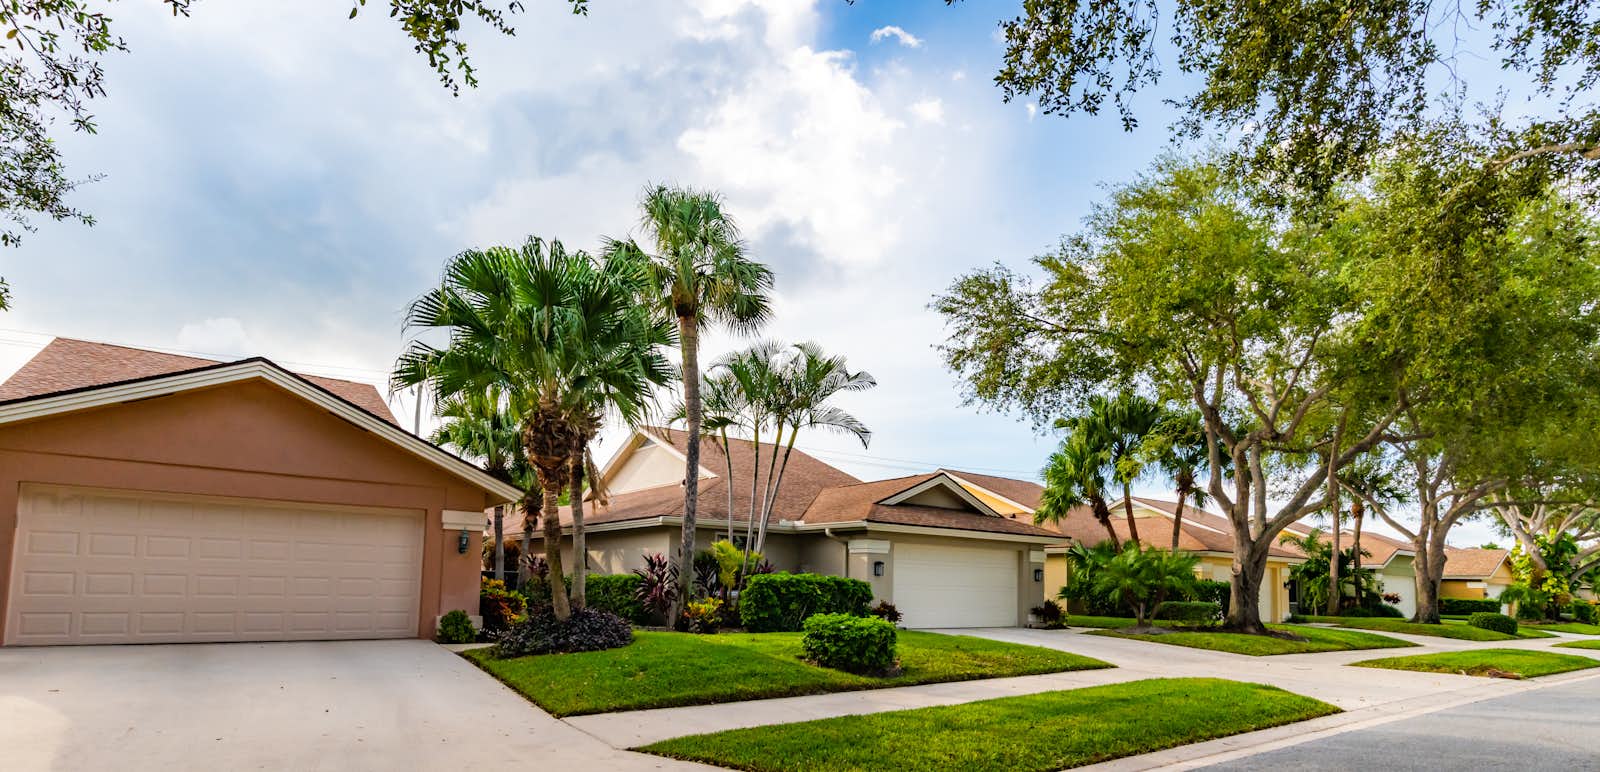 Row of single family homes in a suburban Florida neighborhood